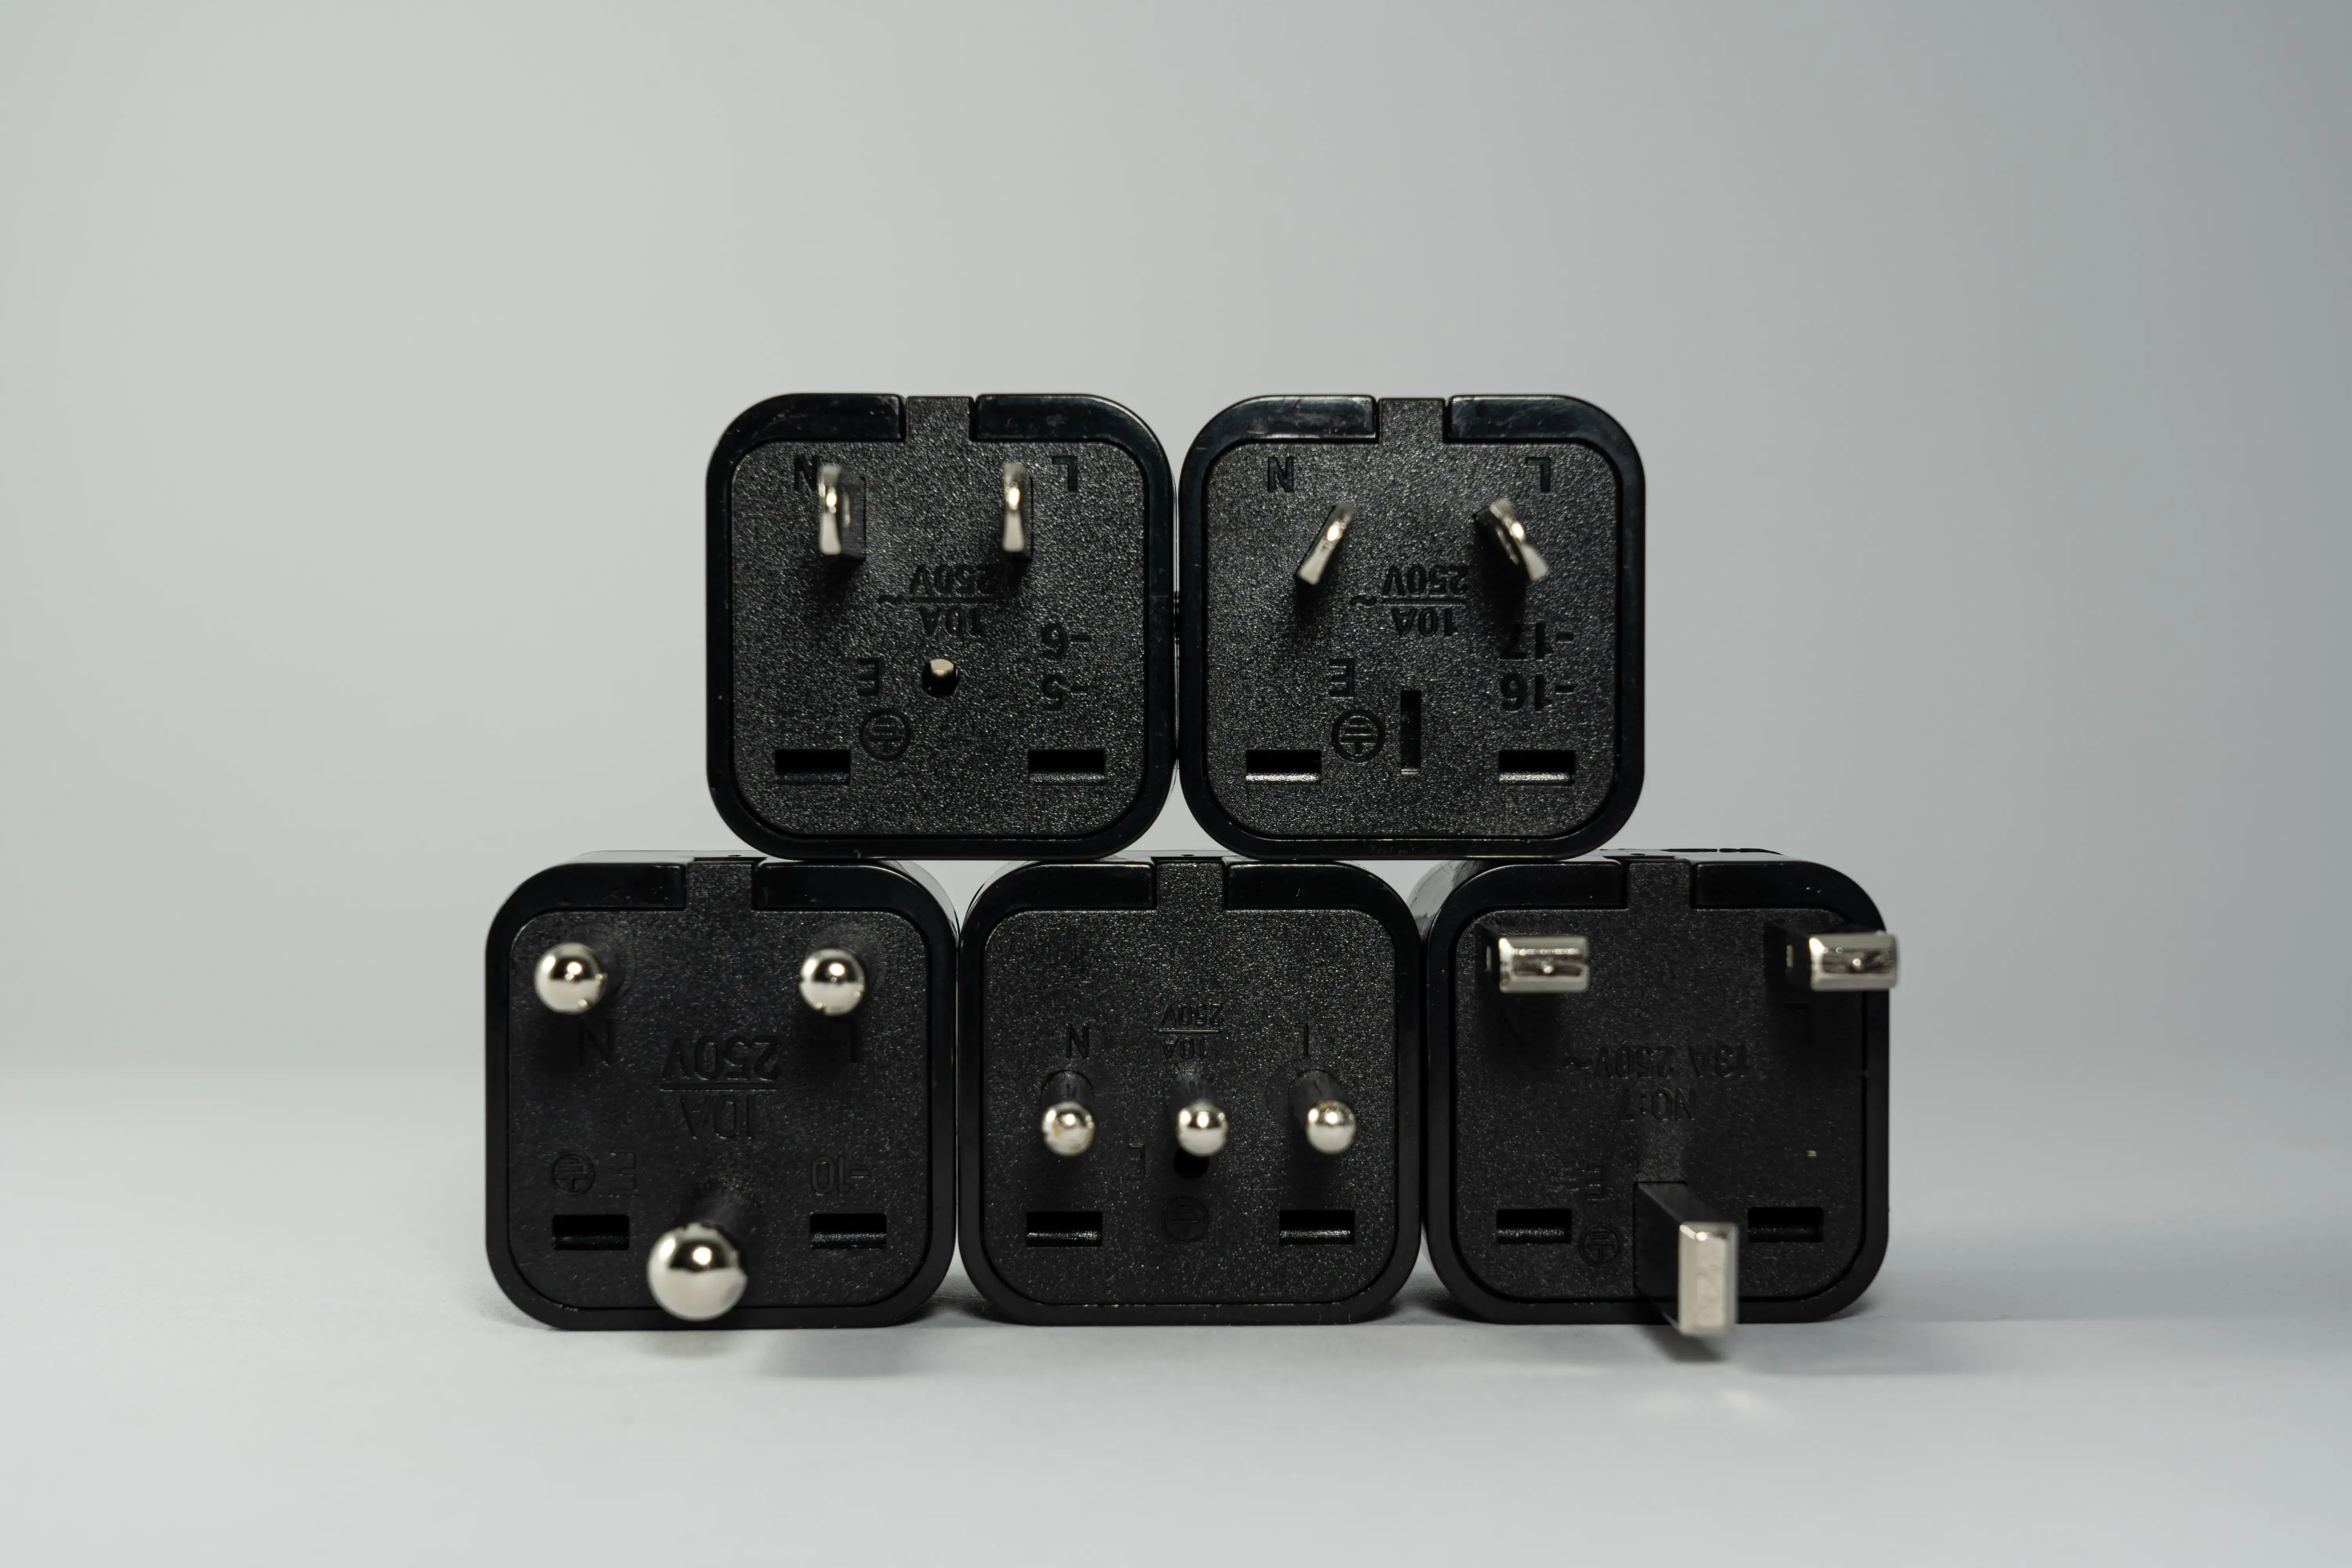 Smart plugs